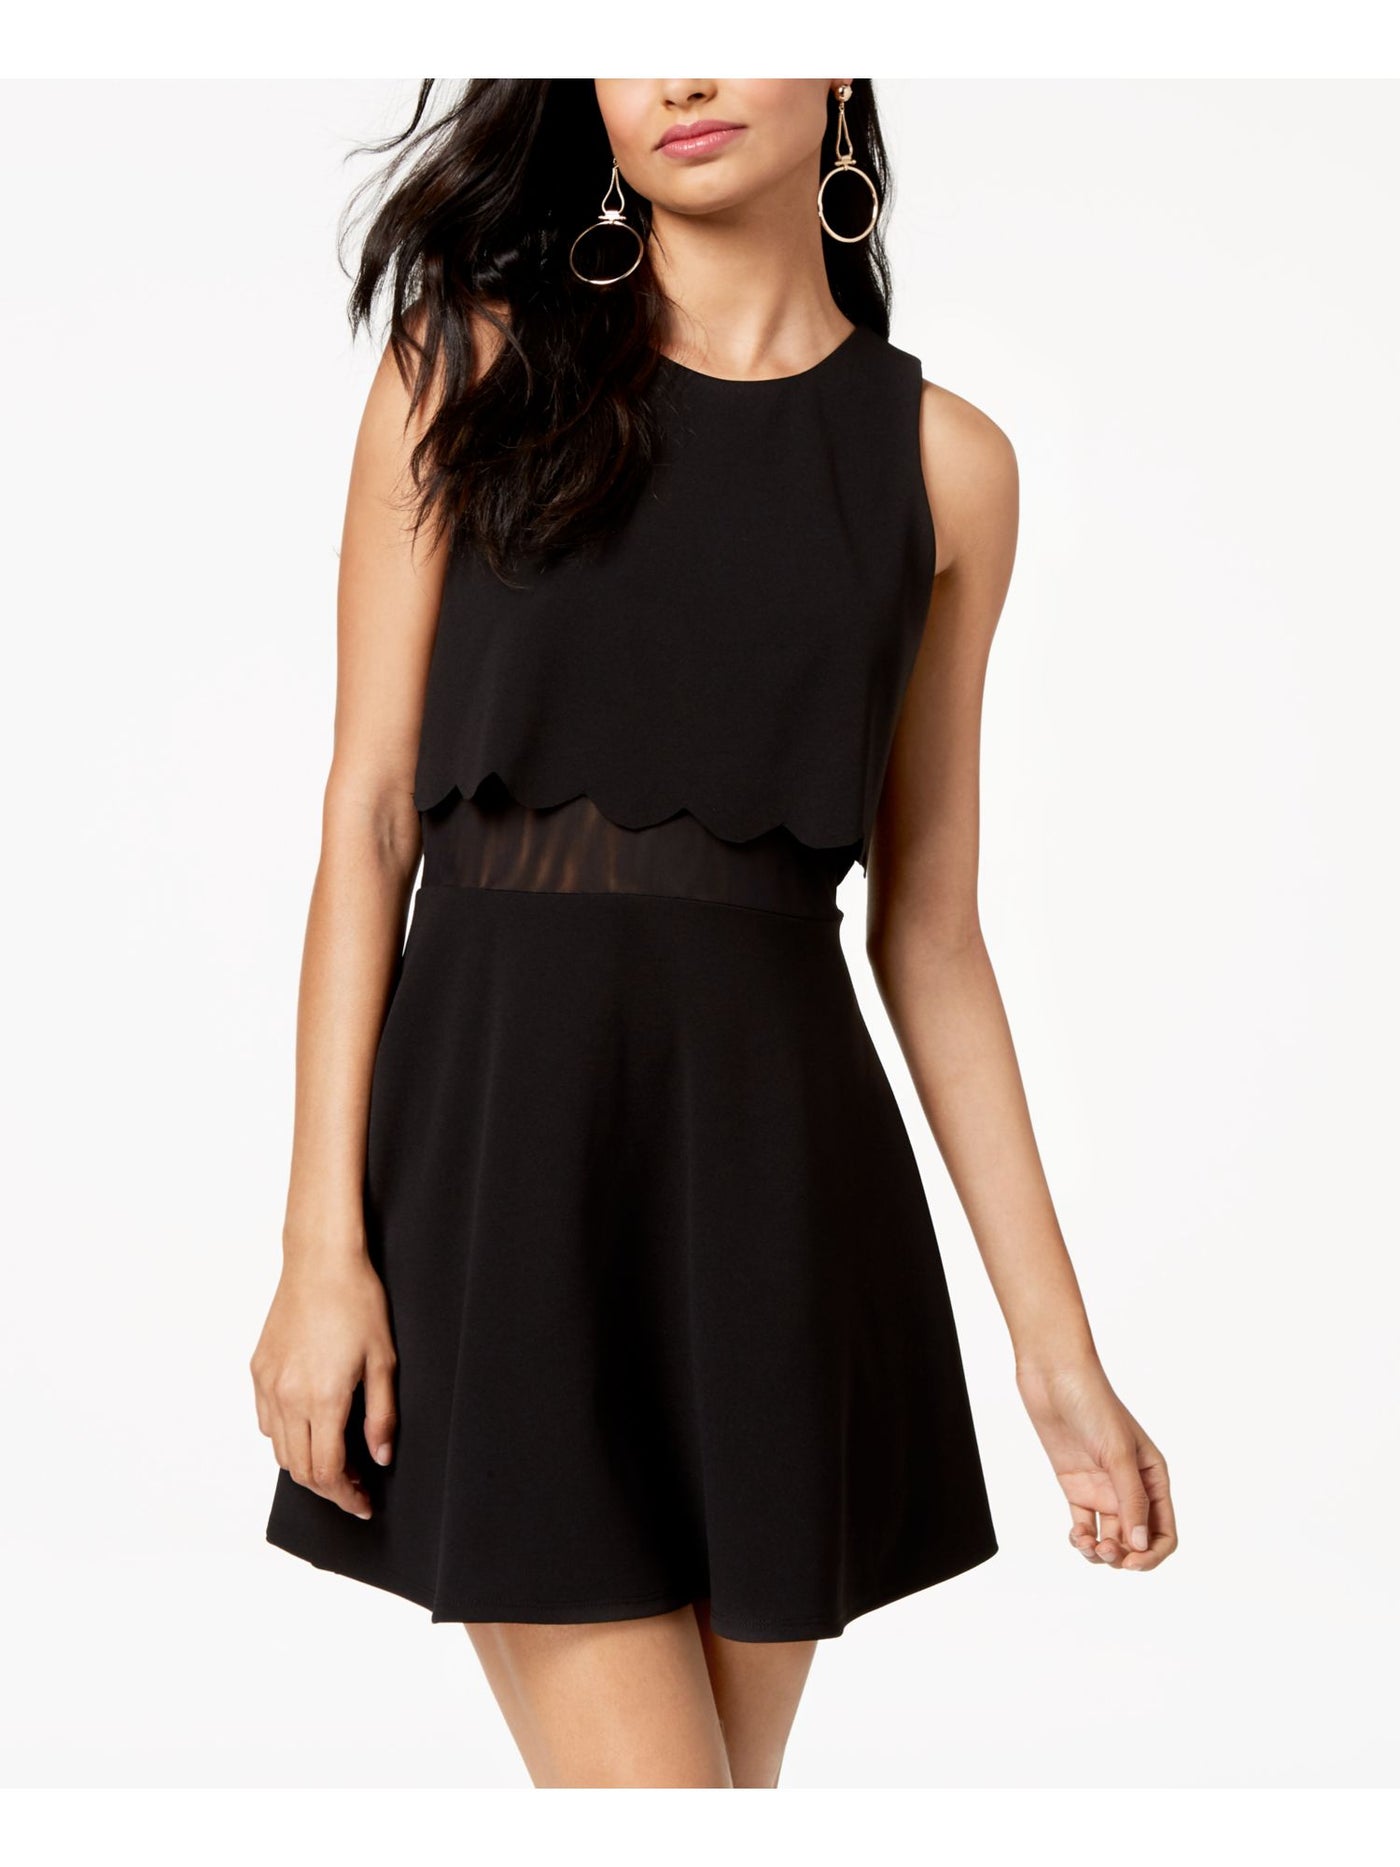 JUMP Womens Black Sheer Sleeveless Jewel Neck Mini Fit + Flare Dress Size: XXS